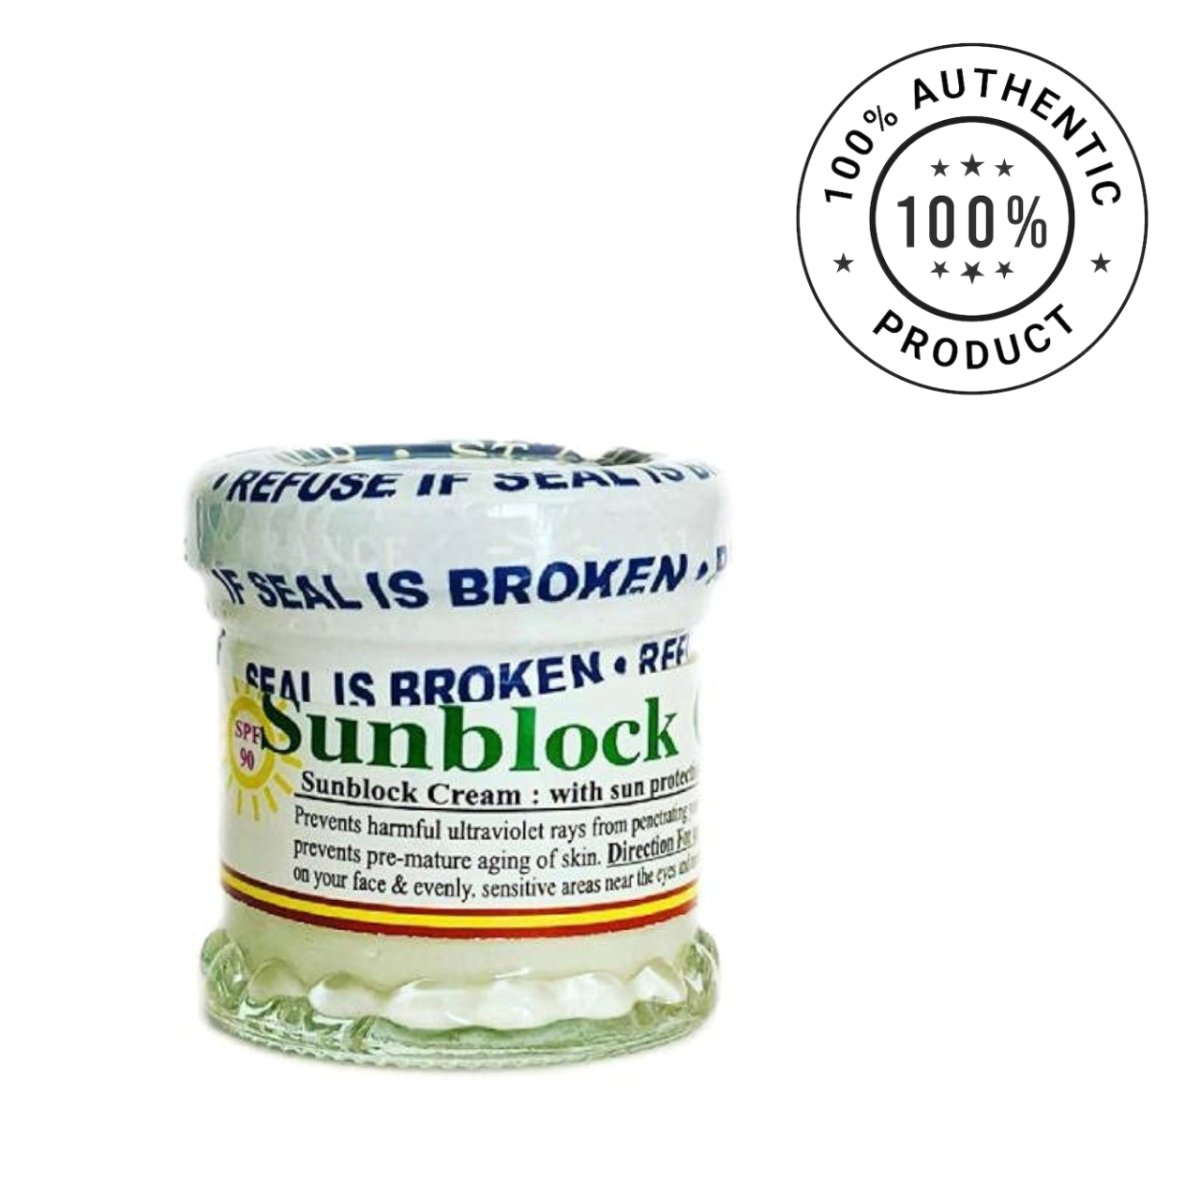 ST DALFOUR Sunblock Cream with sun protection factor 90